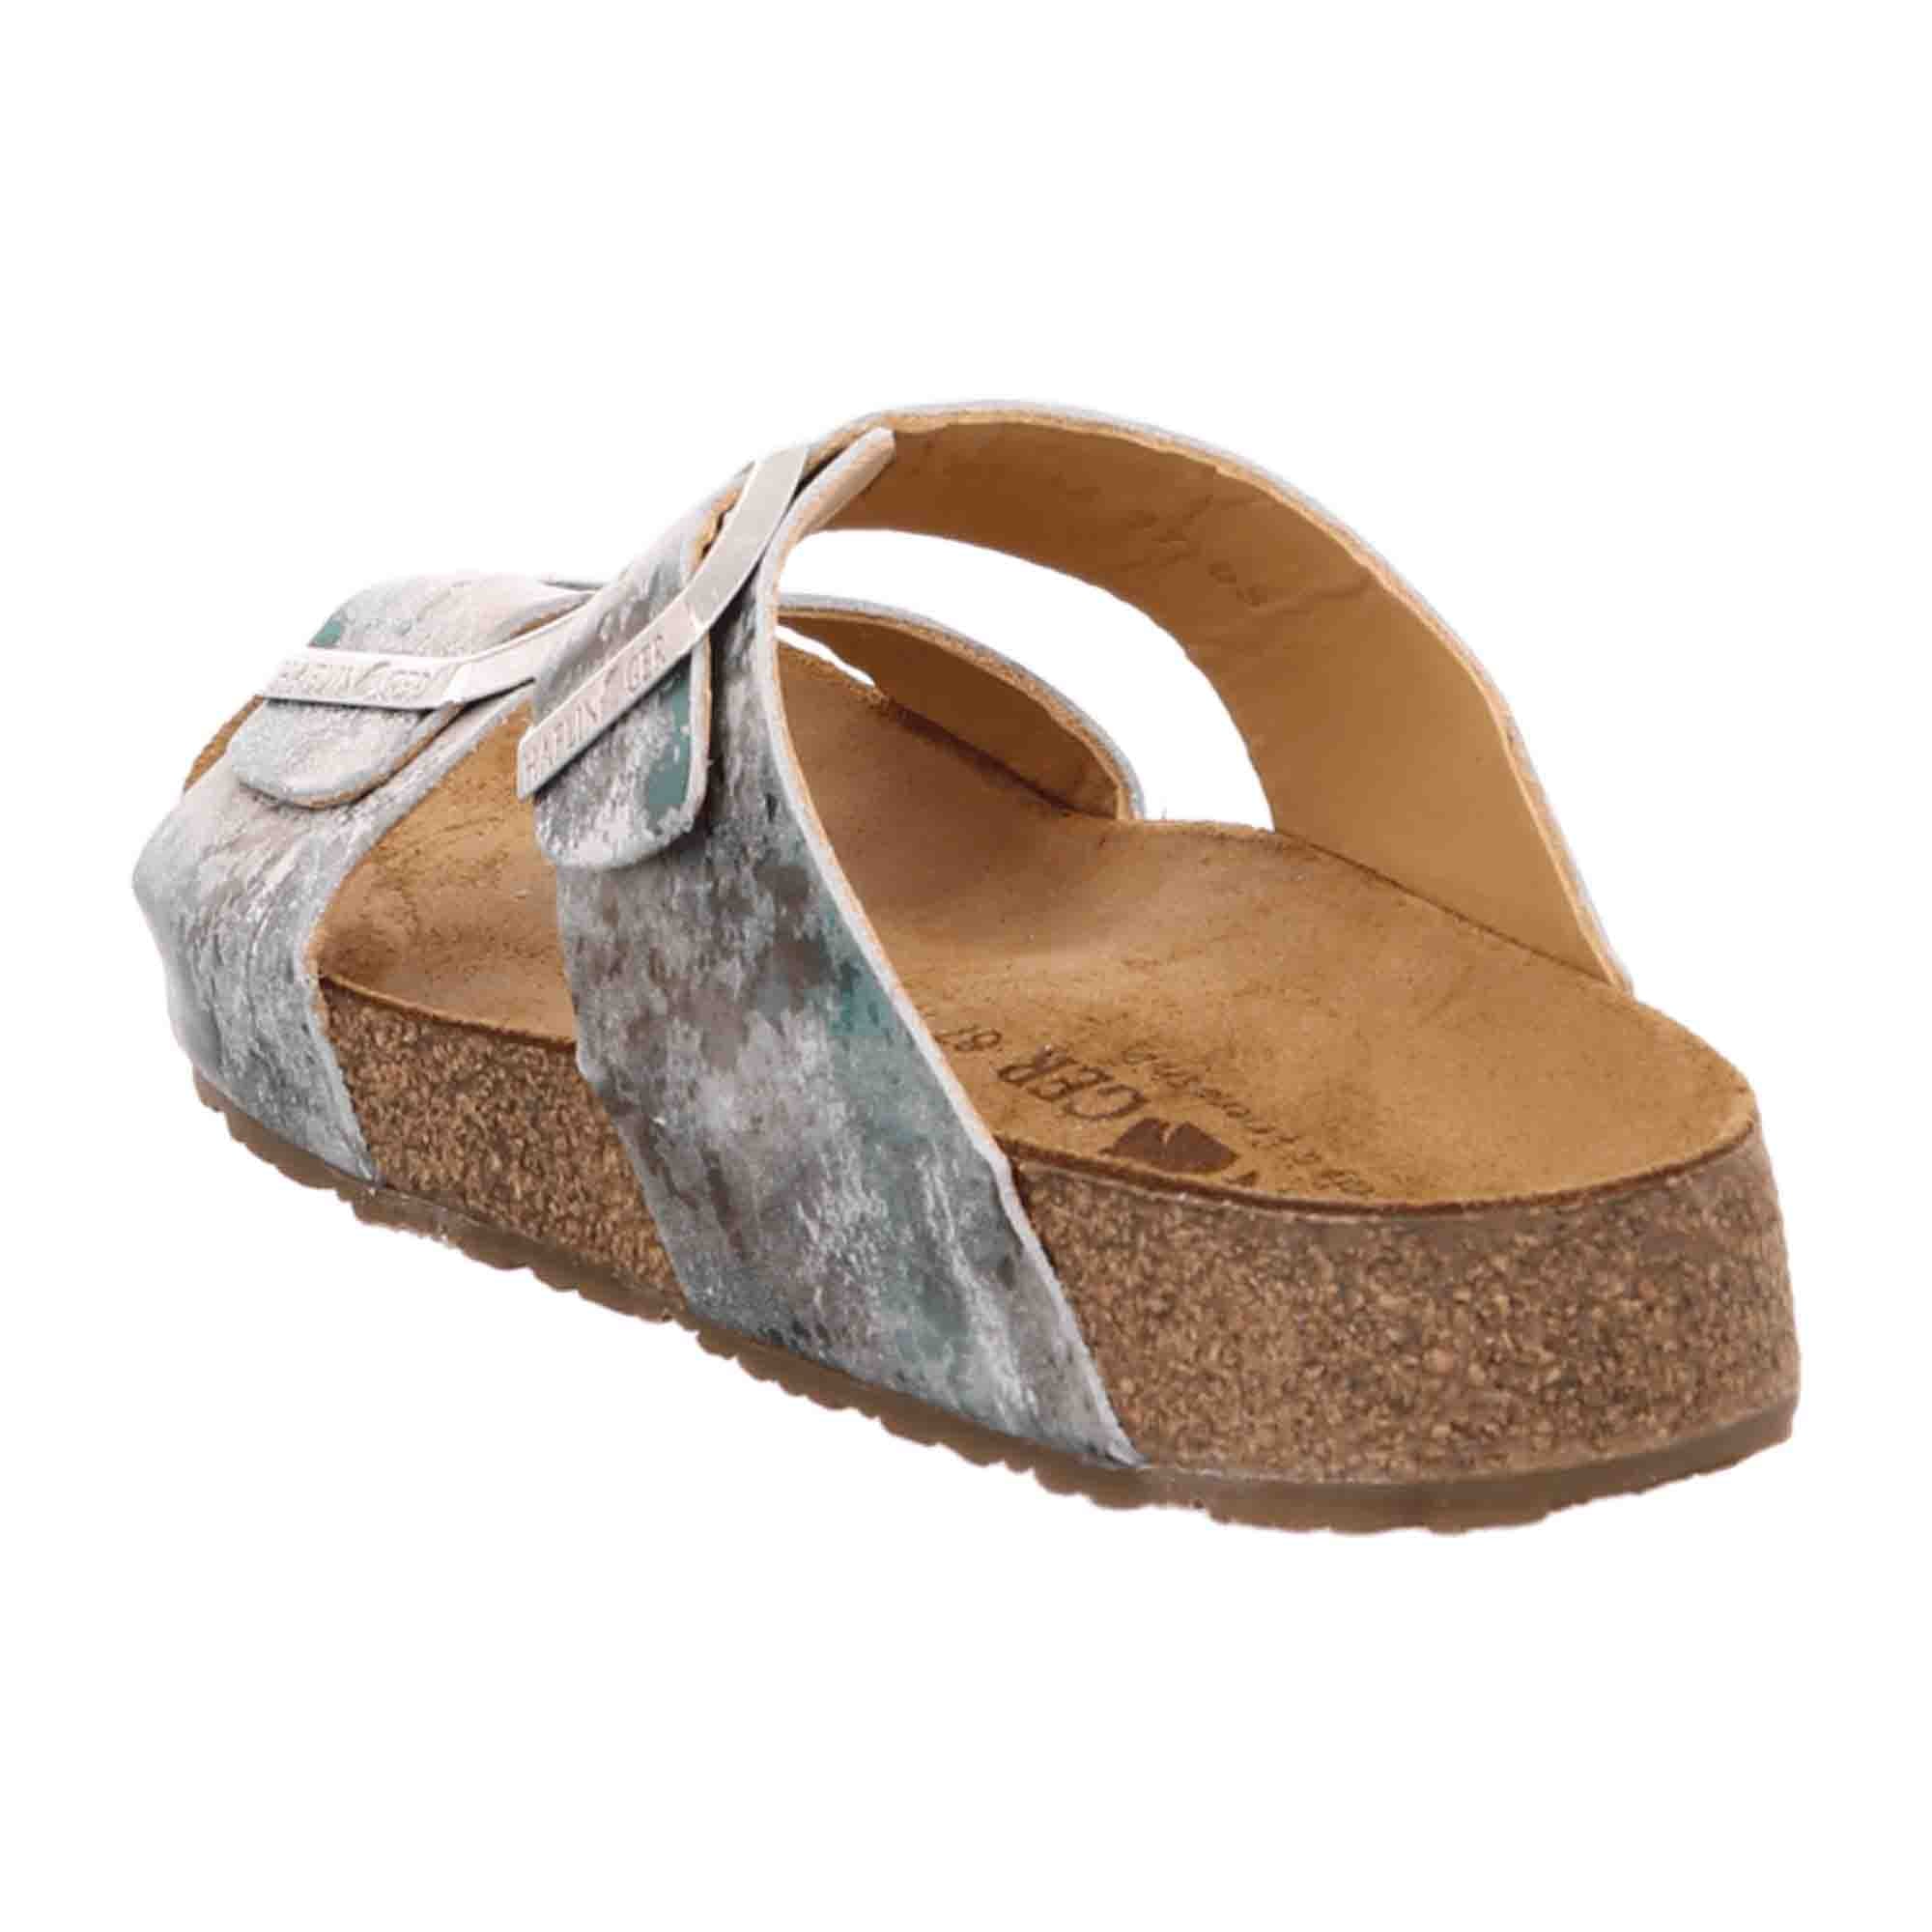 Haflinger Bio Andrea Aqua Fantasy Women's Sandals, Silver - Size EU 37 - Stylish & Eco-Friendly